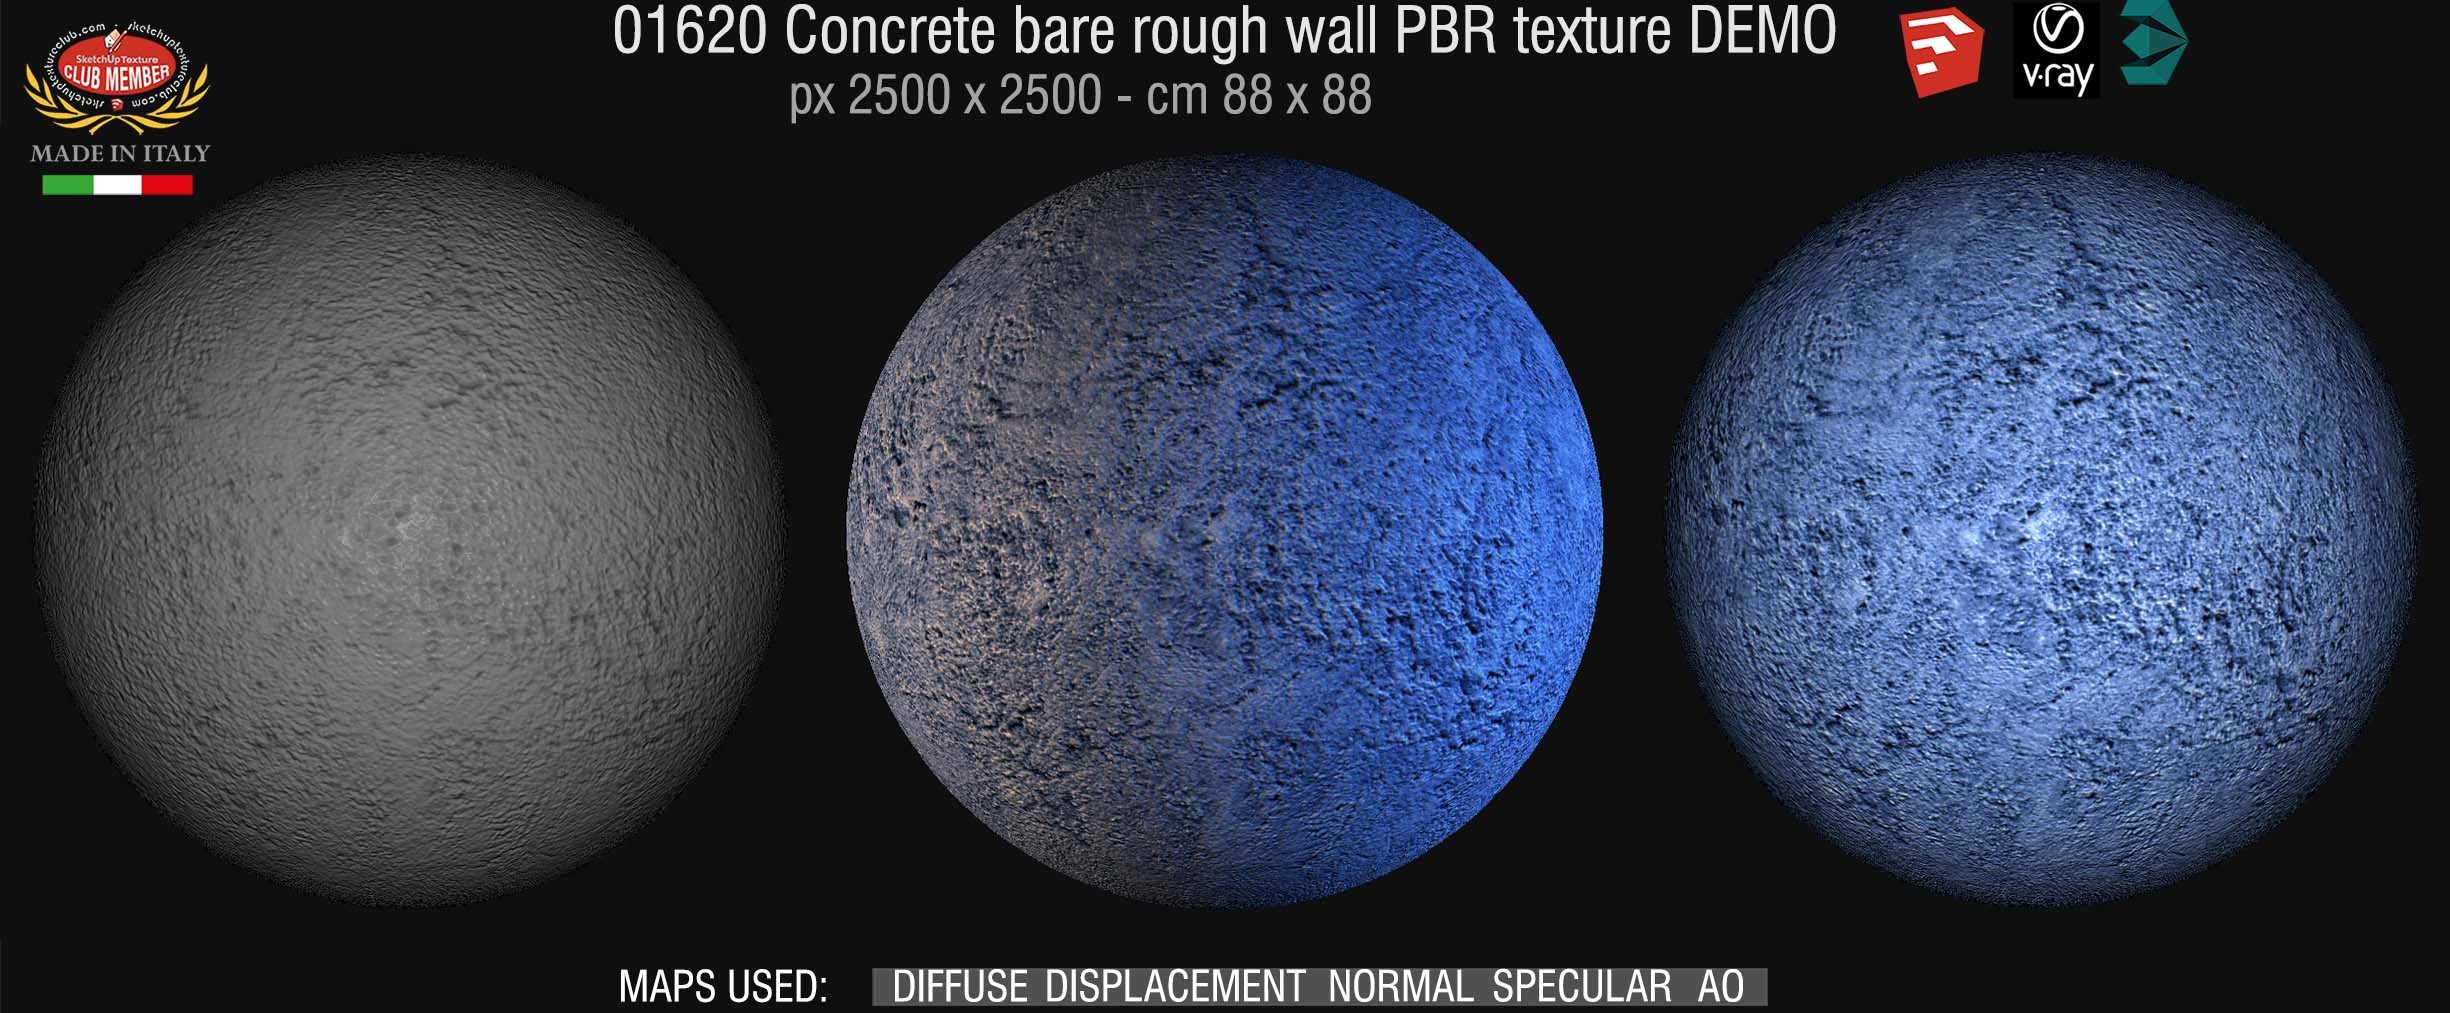 01620 Concrete bare rough wall PBR texture seamless DEMO